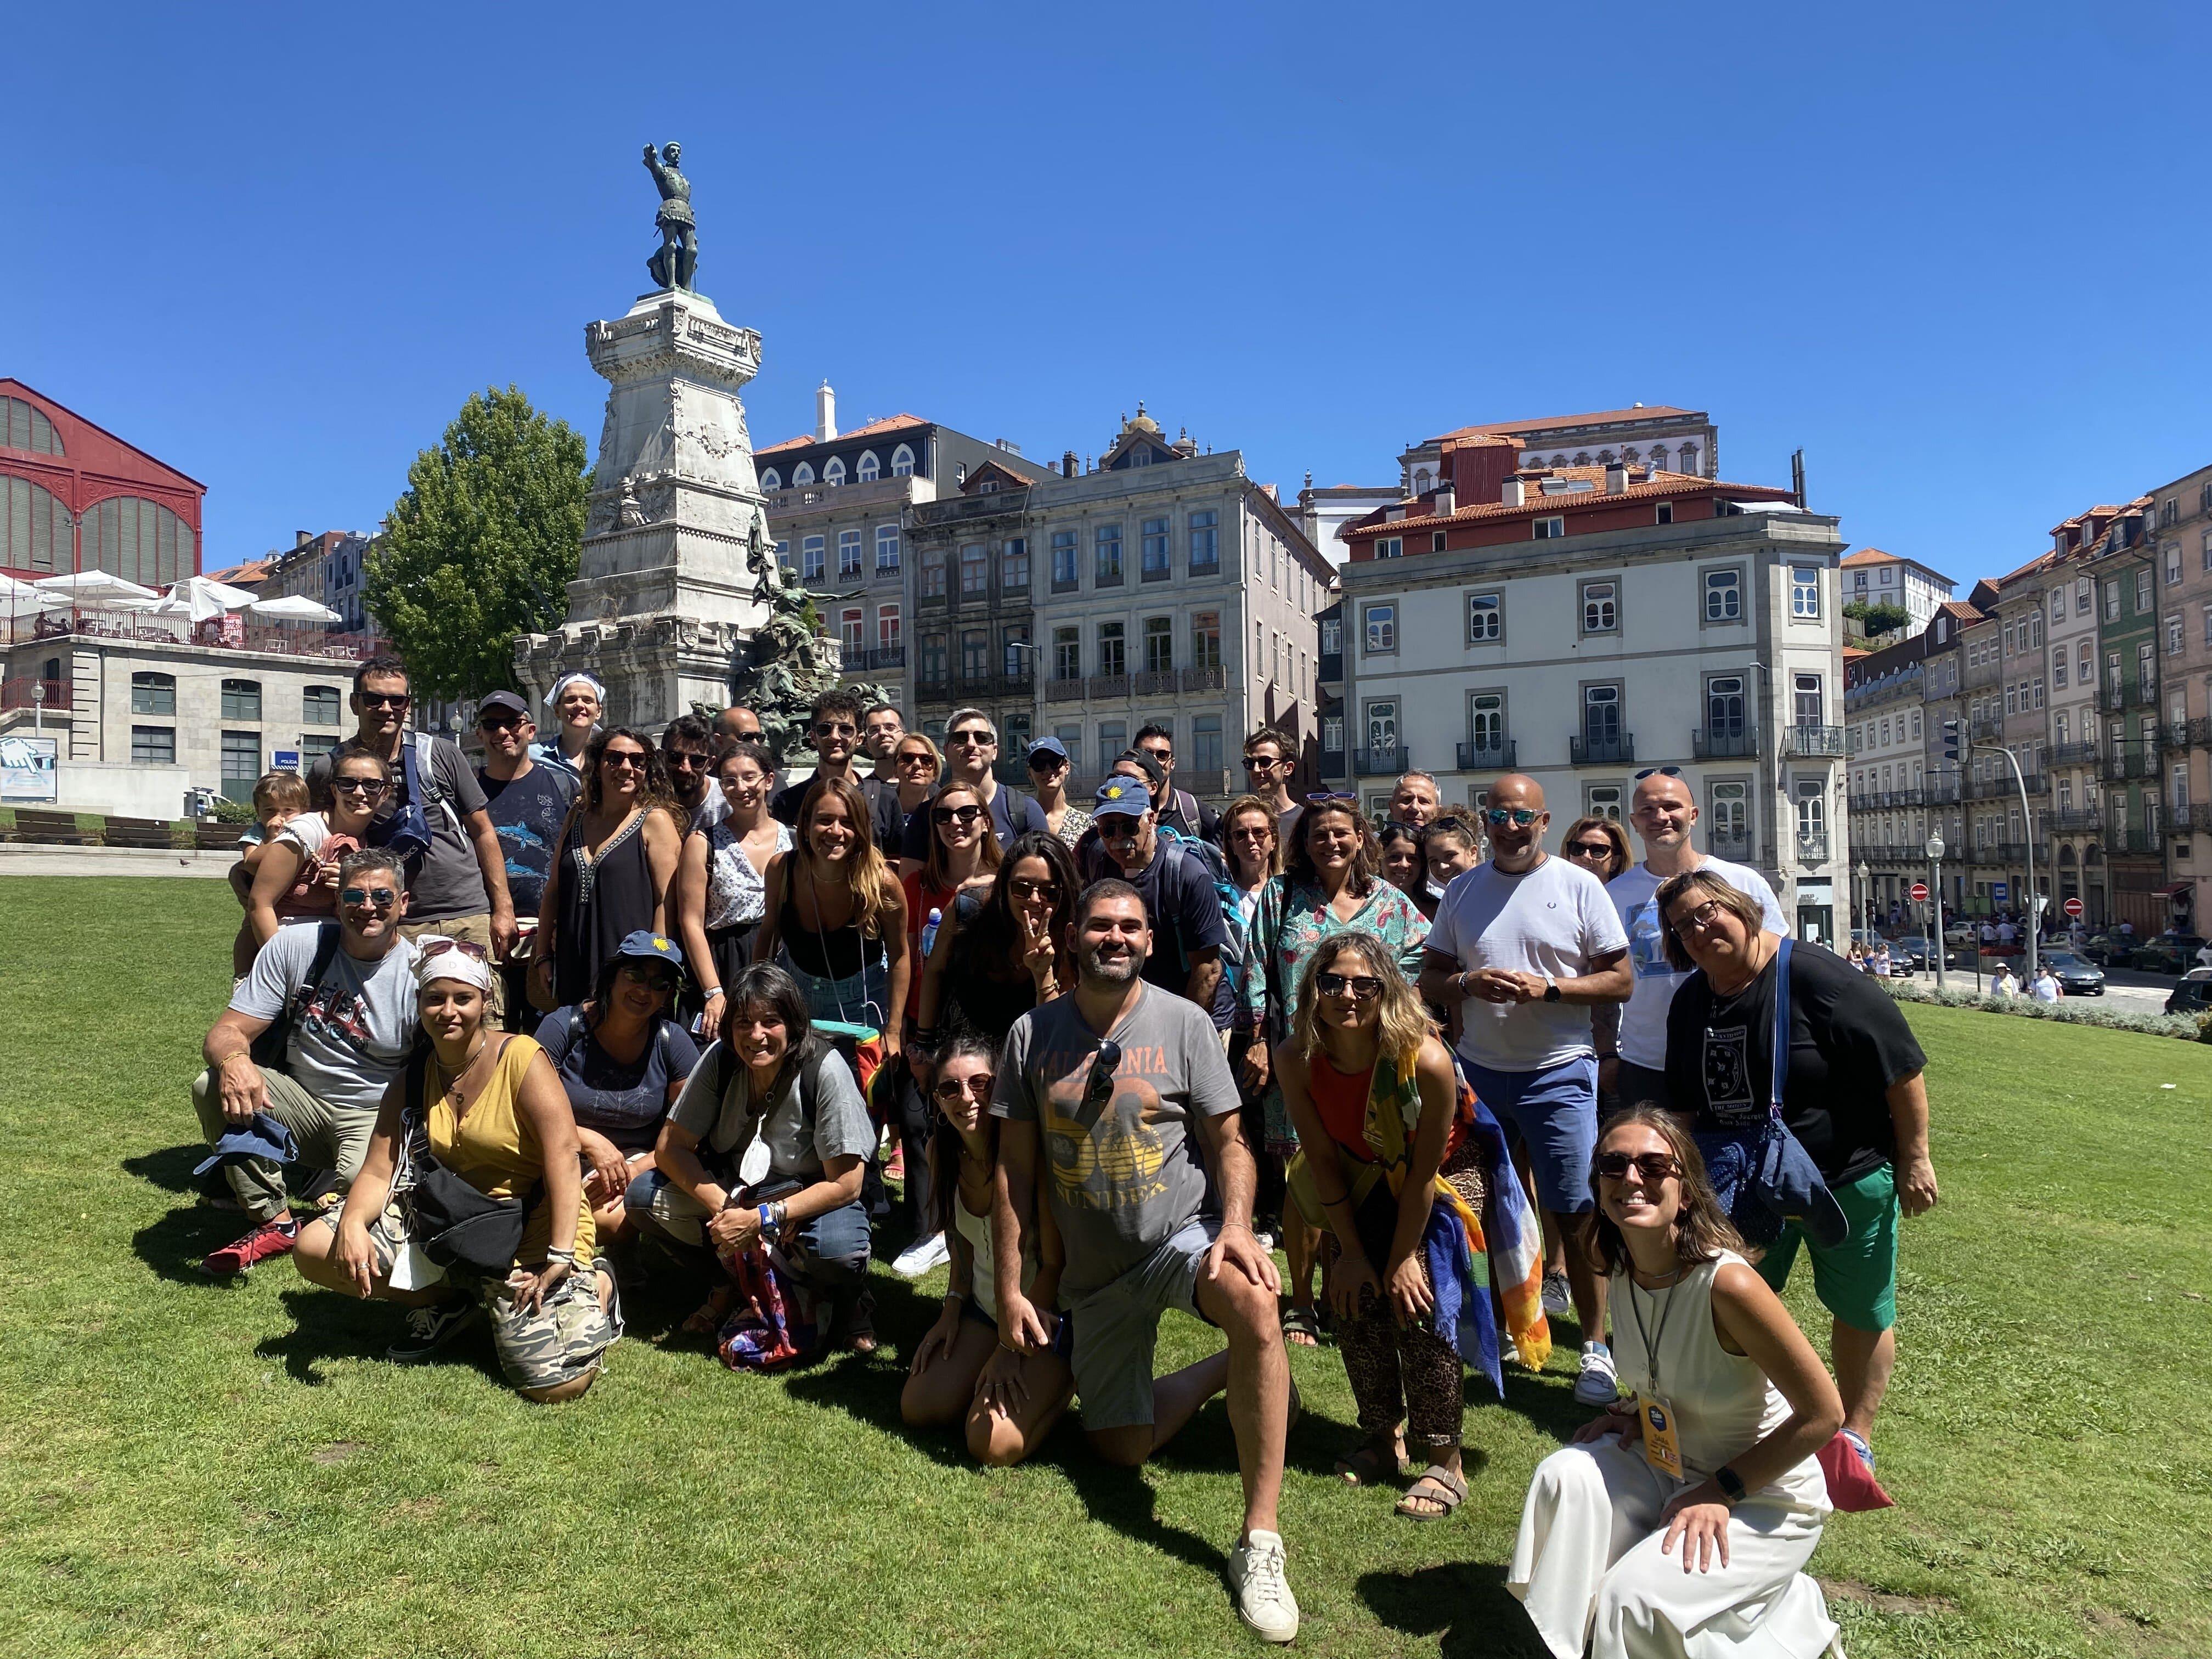 Porto Free Tour: The Unvanquished City